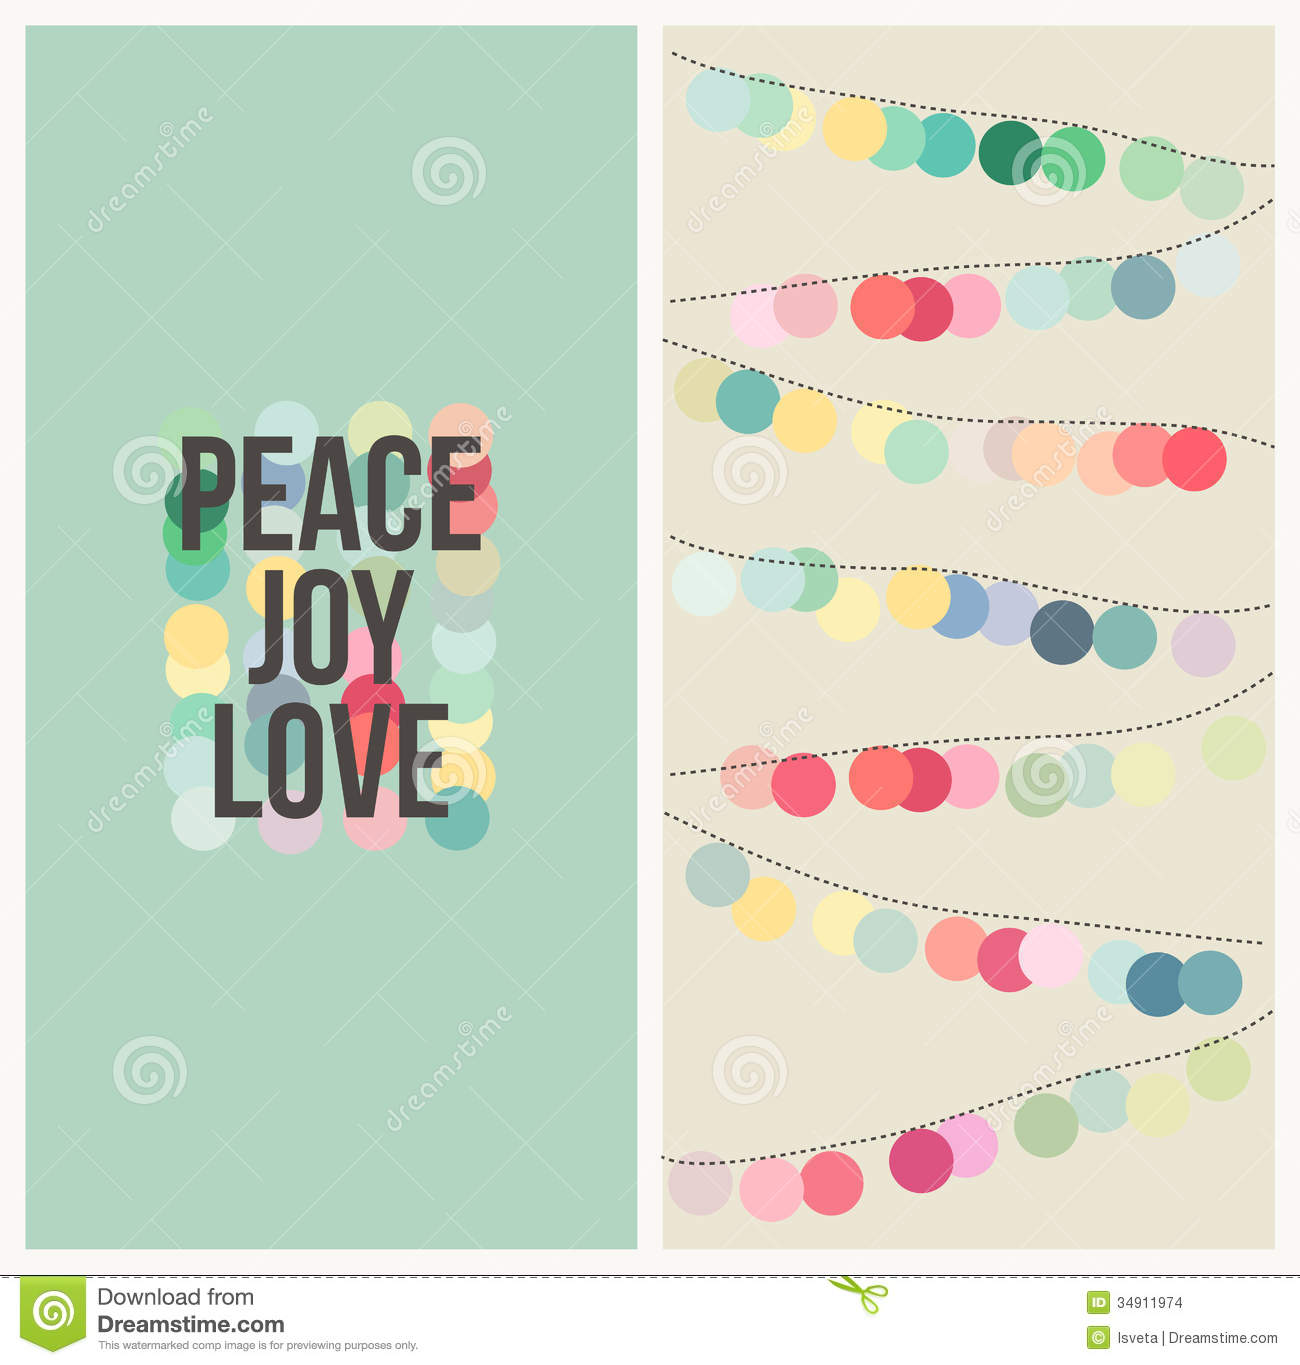 Peace Love Joy  Multicolored Christmas Design Stock Images   Image